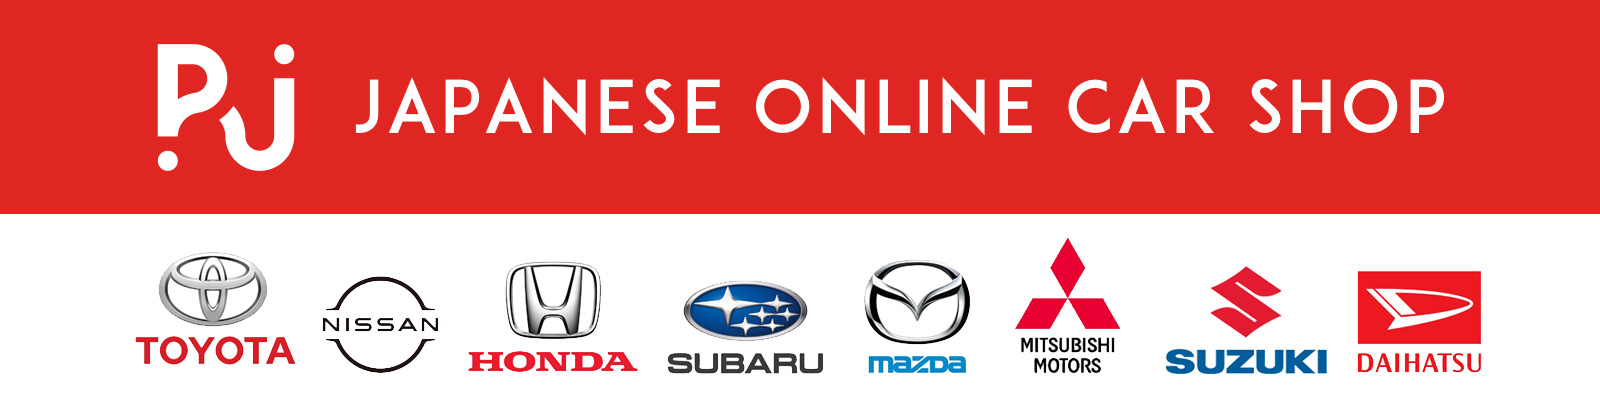 PRIMASS Japan Japanese Used Car Online Shop